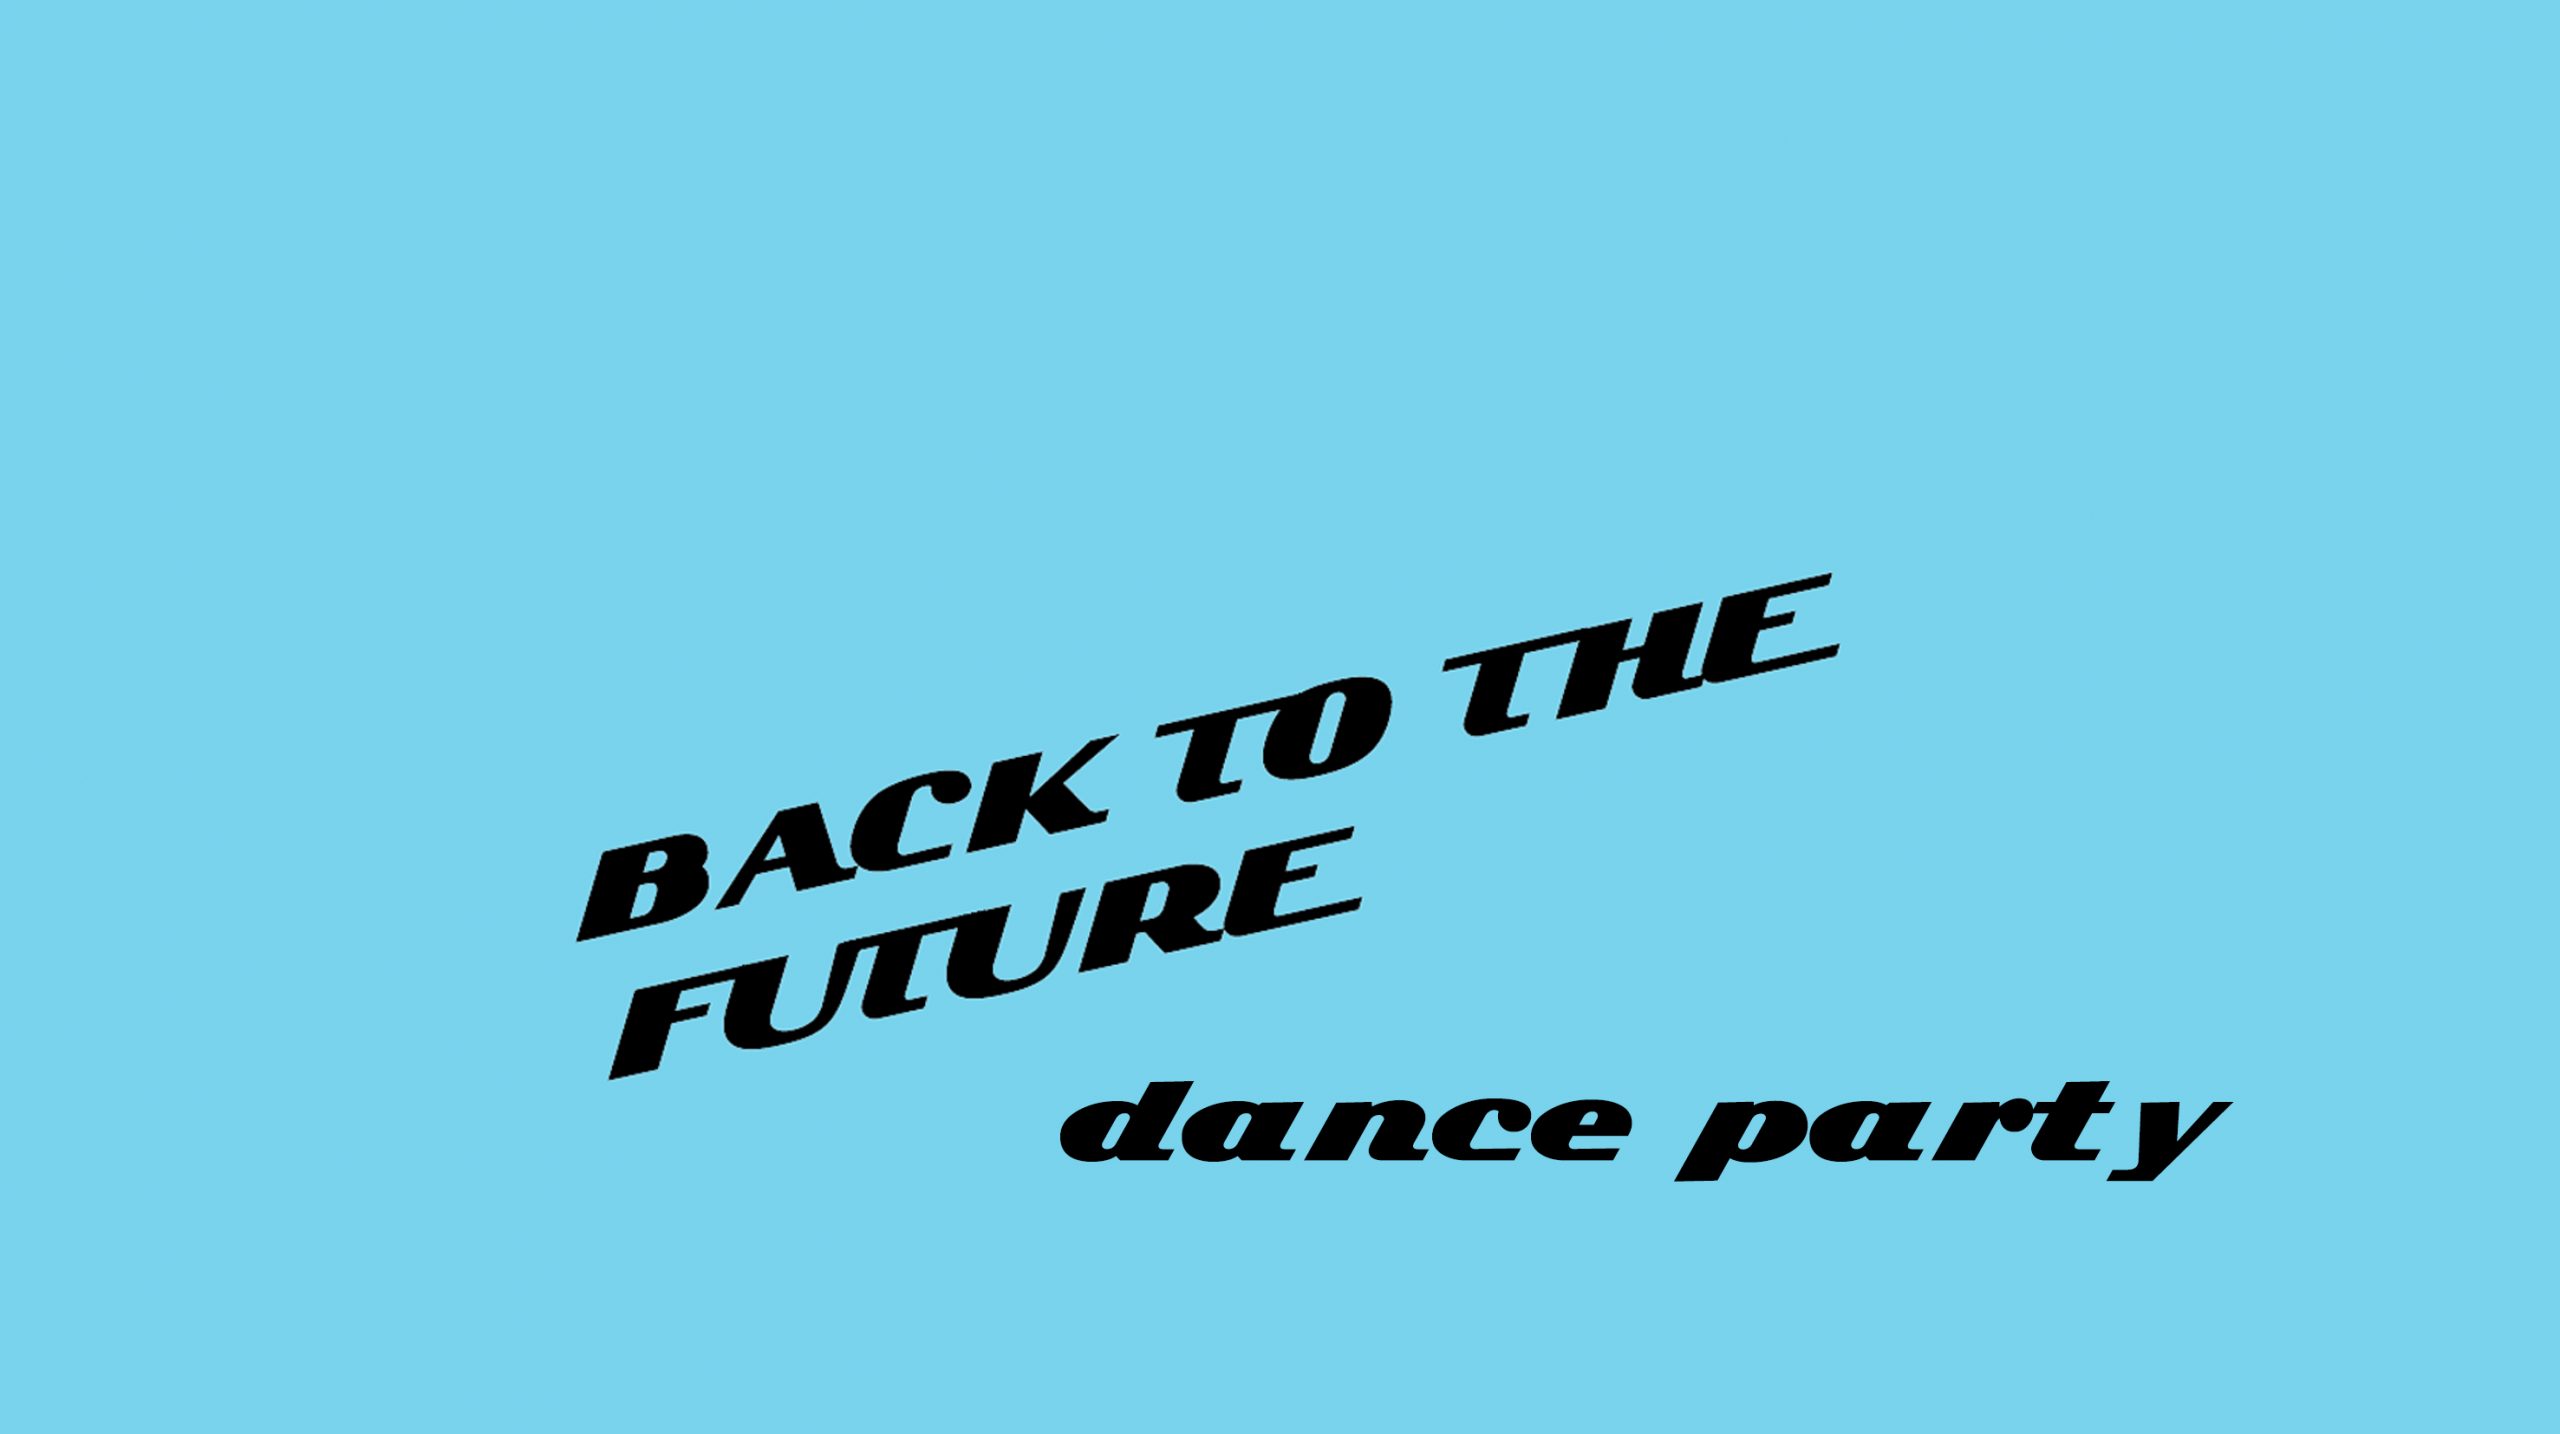 Back-TT-Future-web banner-2